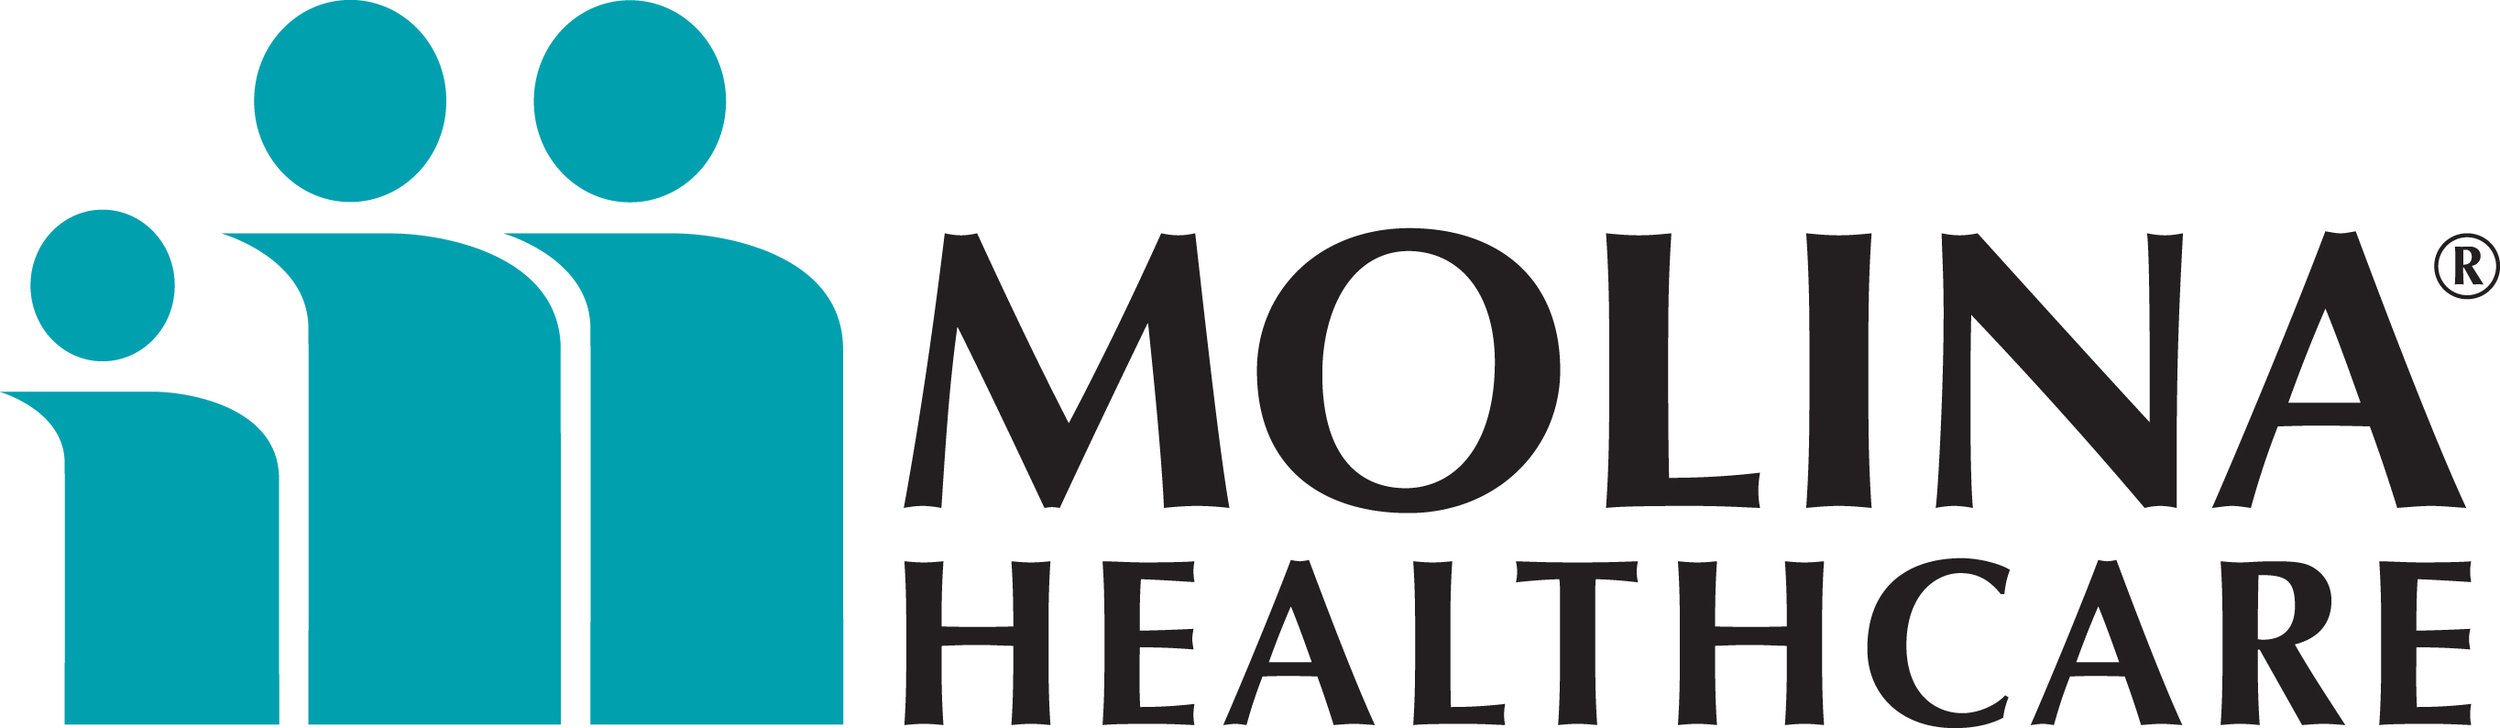 Molina-healthcare-logo-pms320.jpg